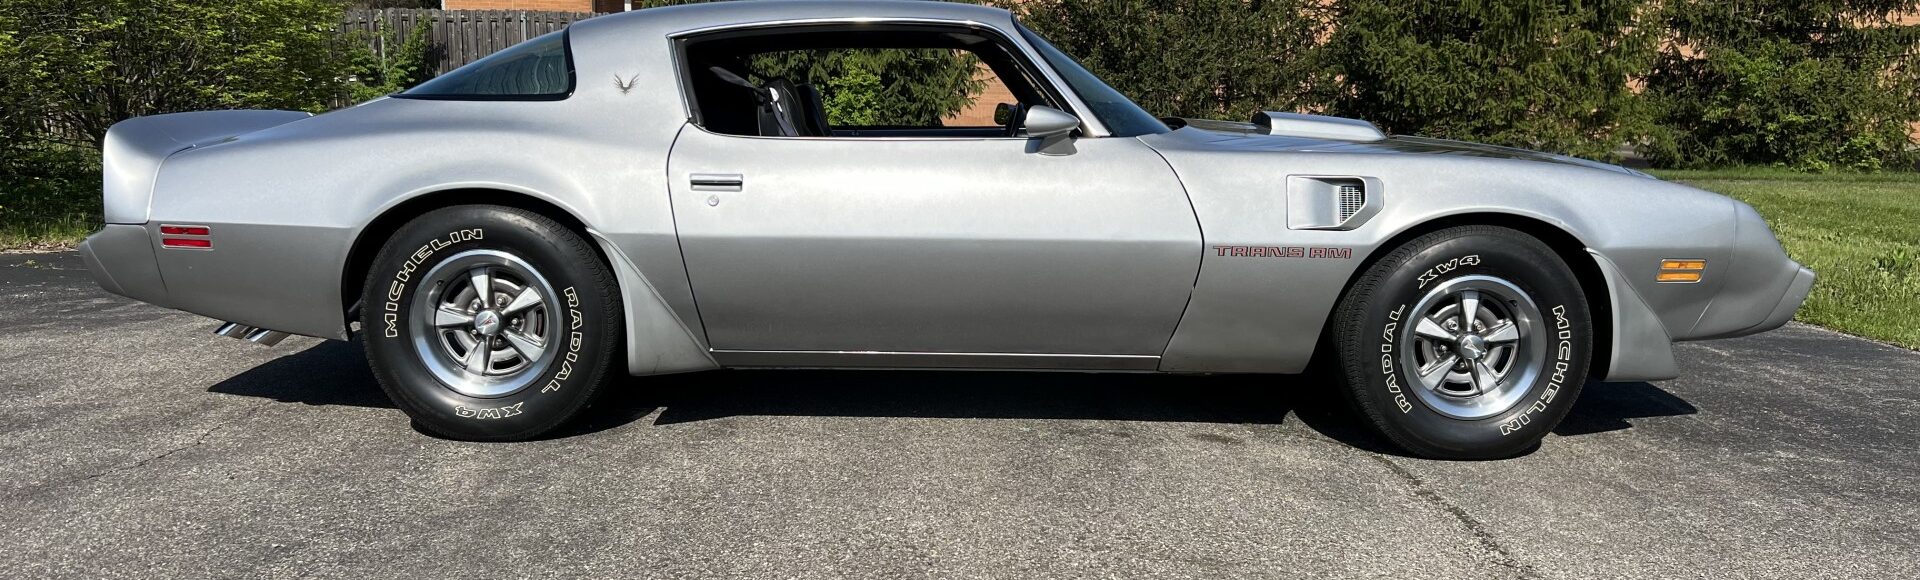 1980 Pontiac Trans AM, 51K Miles, Original Paperwork, $24,900